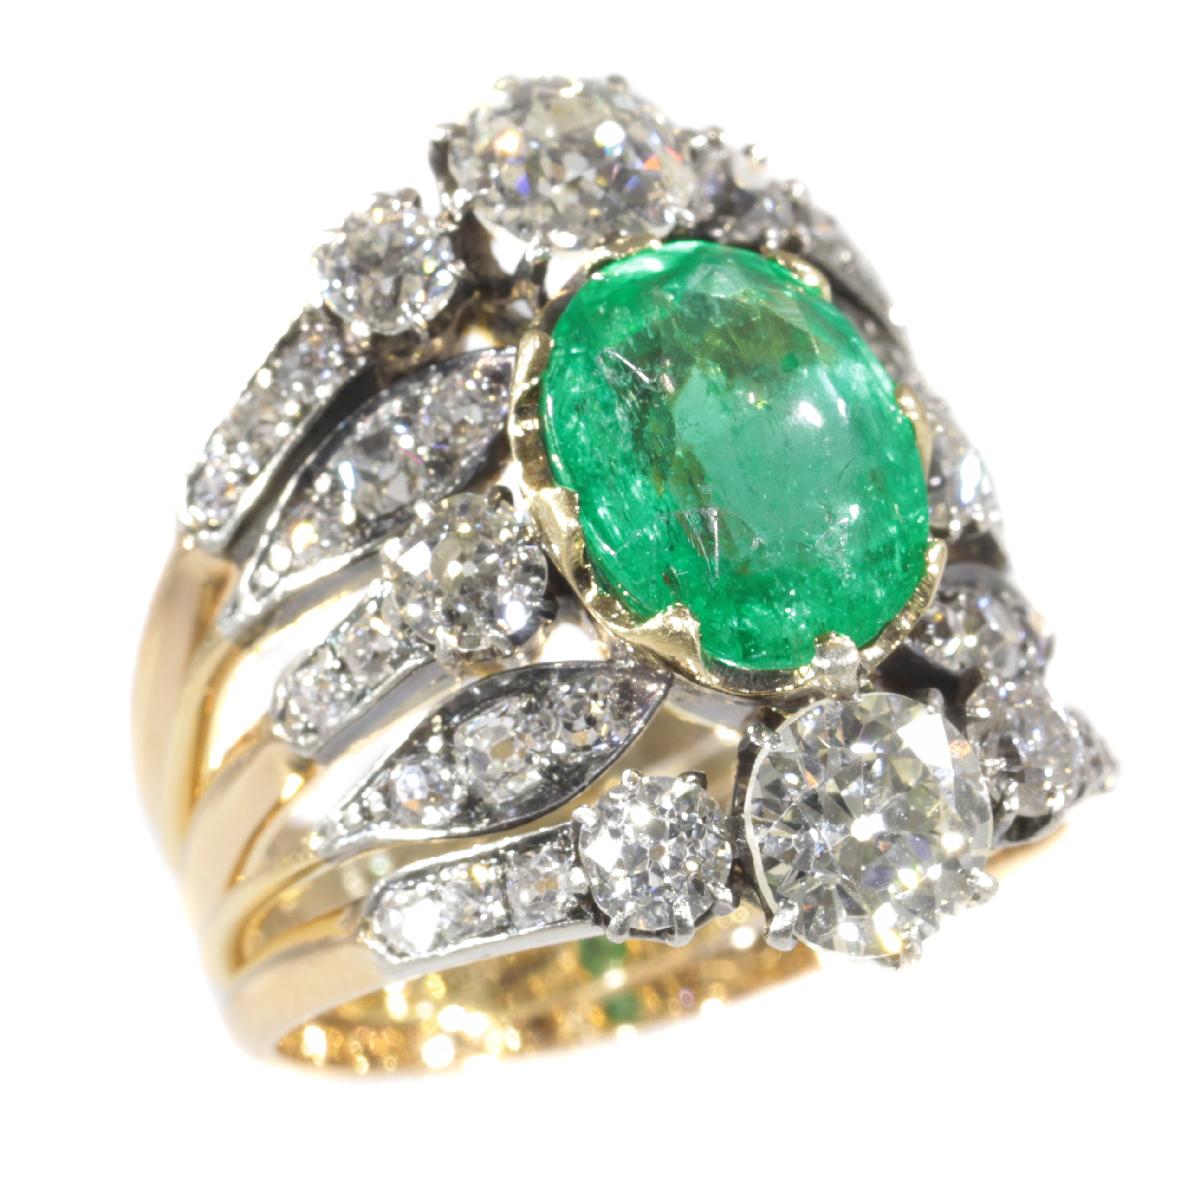 True Eyecatcher Victorian Antique Ring with a 3.50 Carat Ovalcut Emerald 7